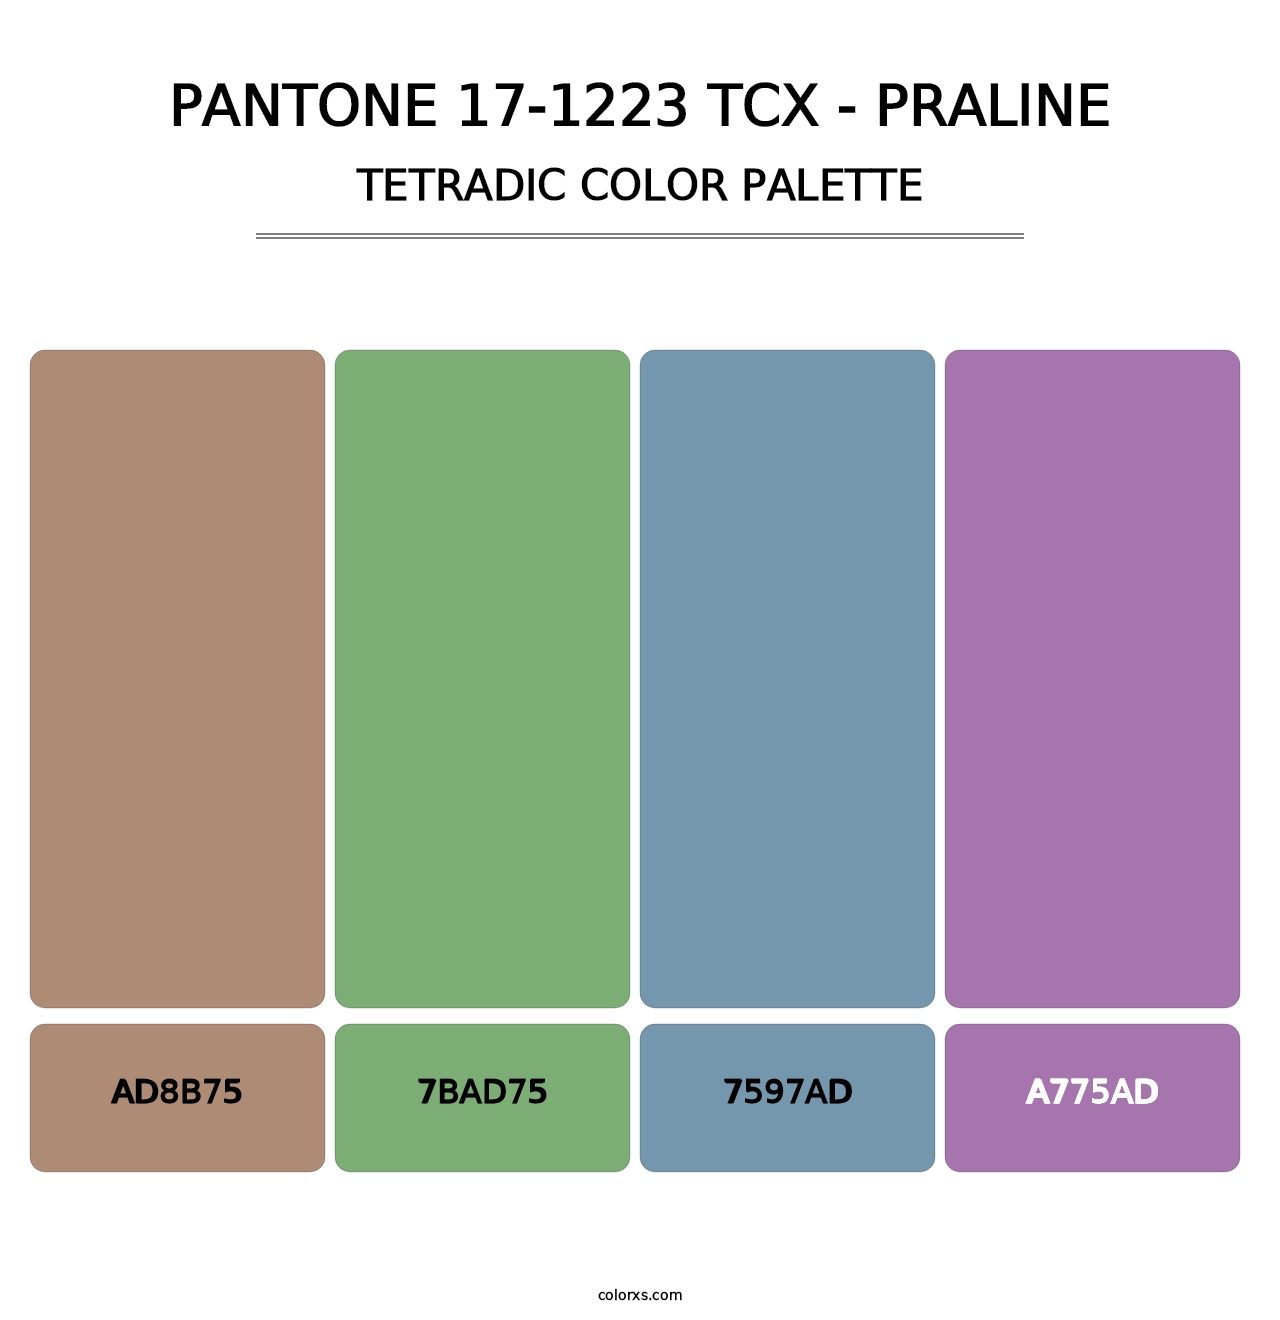 PANTONE 17-1223 TCX - Praline - Tetradic Color Palette